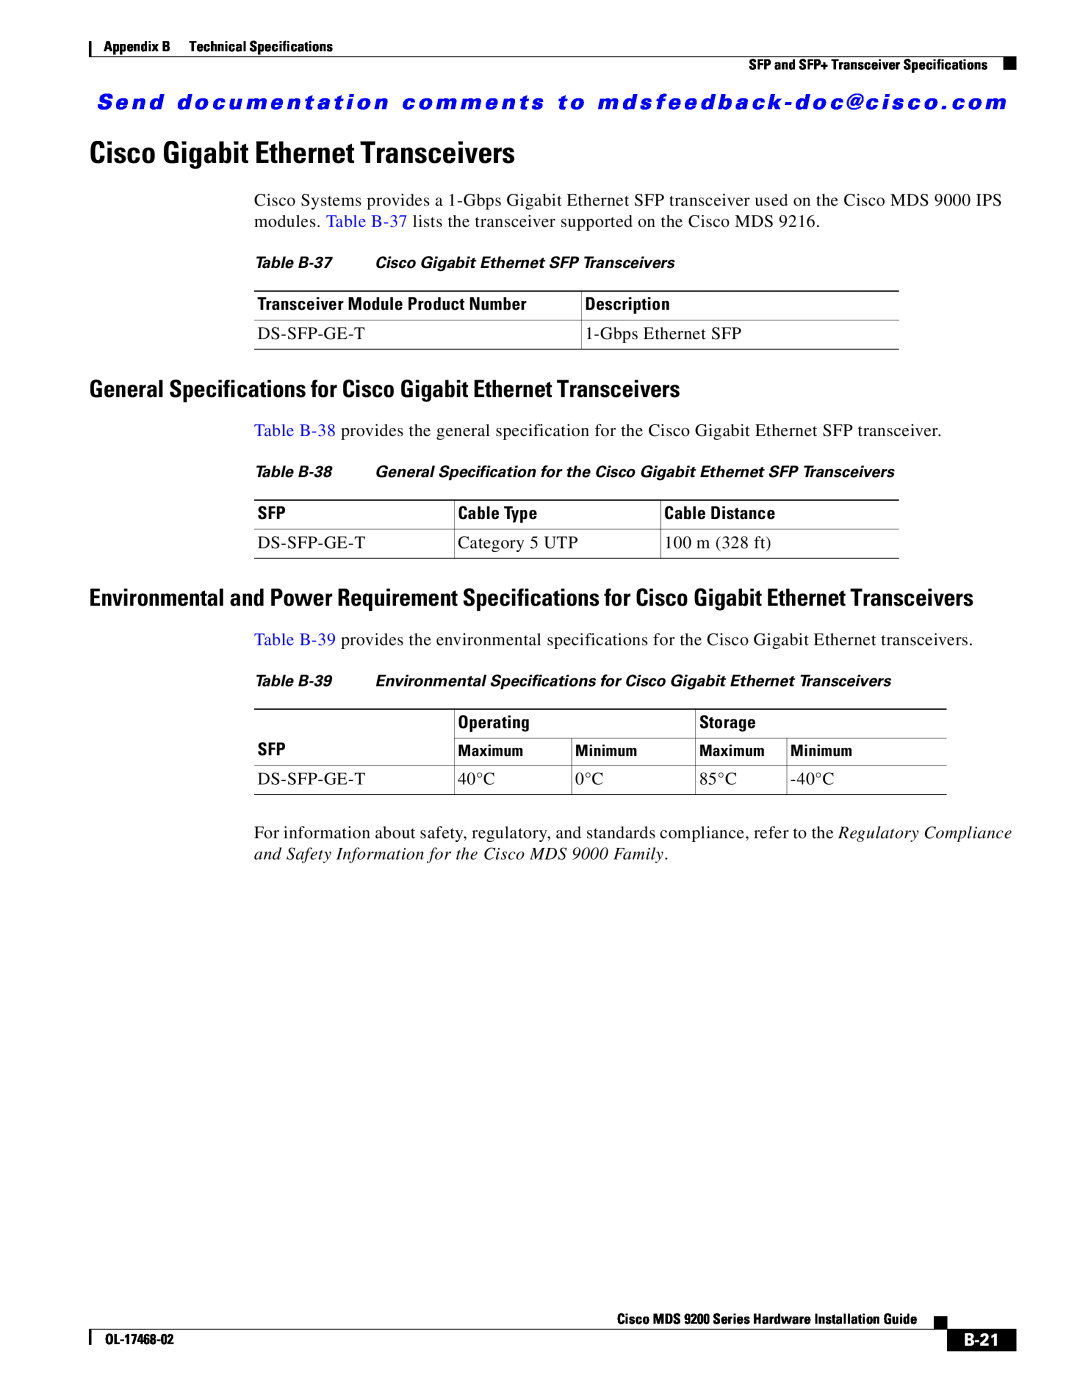 Cisco Systems MDS 9200 Series manual Cisco Gigabit Ethernet Transceivers, B-21 